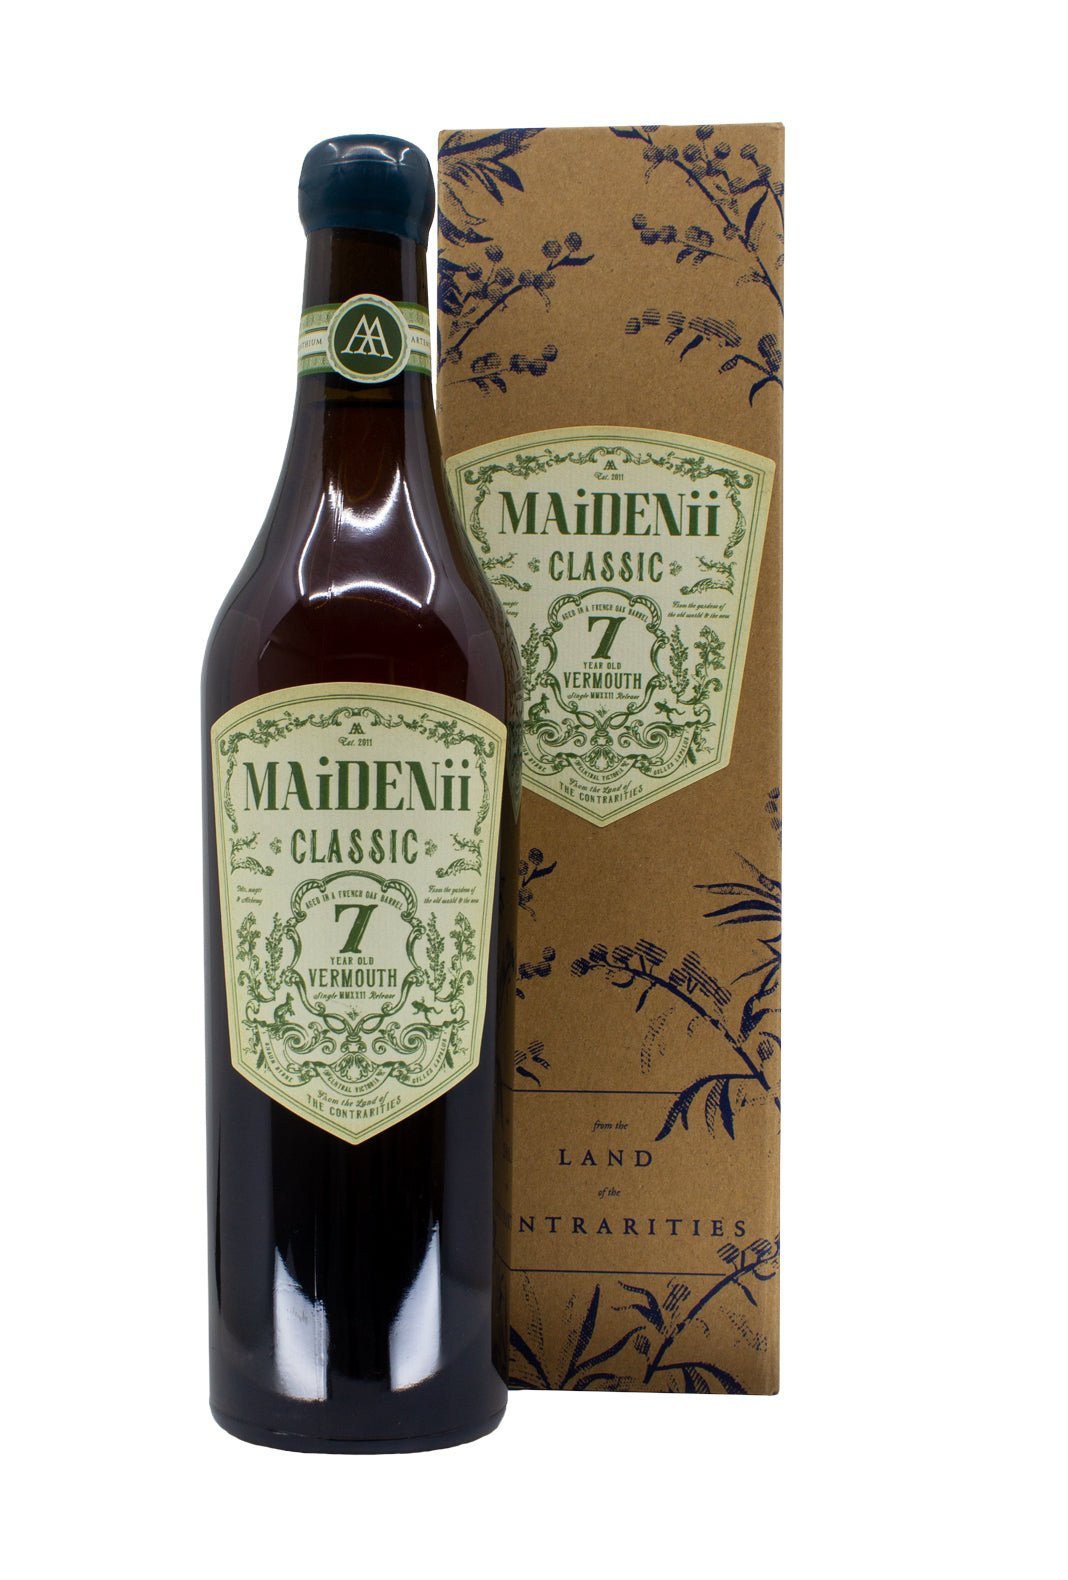 Maidenii Classic 7 Single Cask Vermouth 17% 500ml | Liquor & Spirits | Shop online at Spirits of France